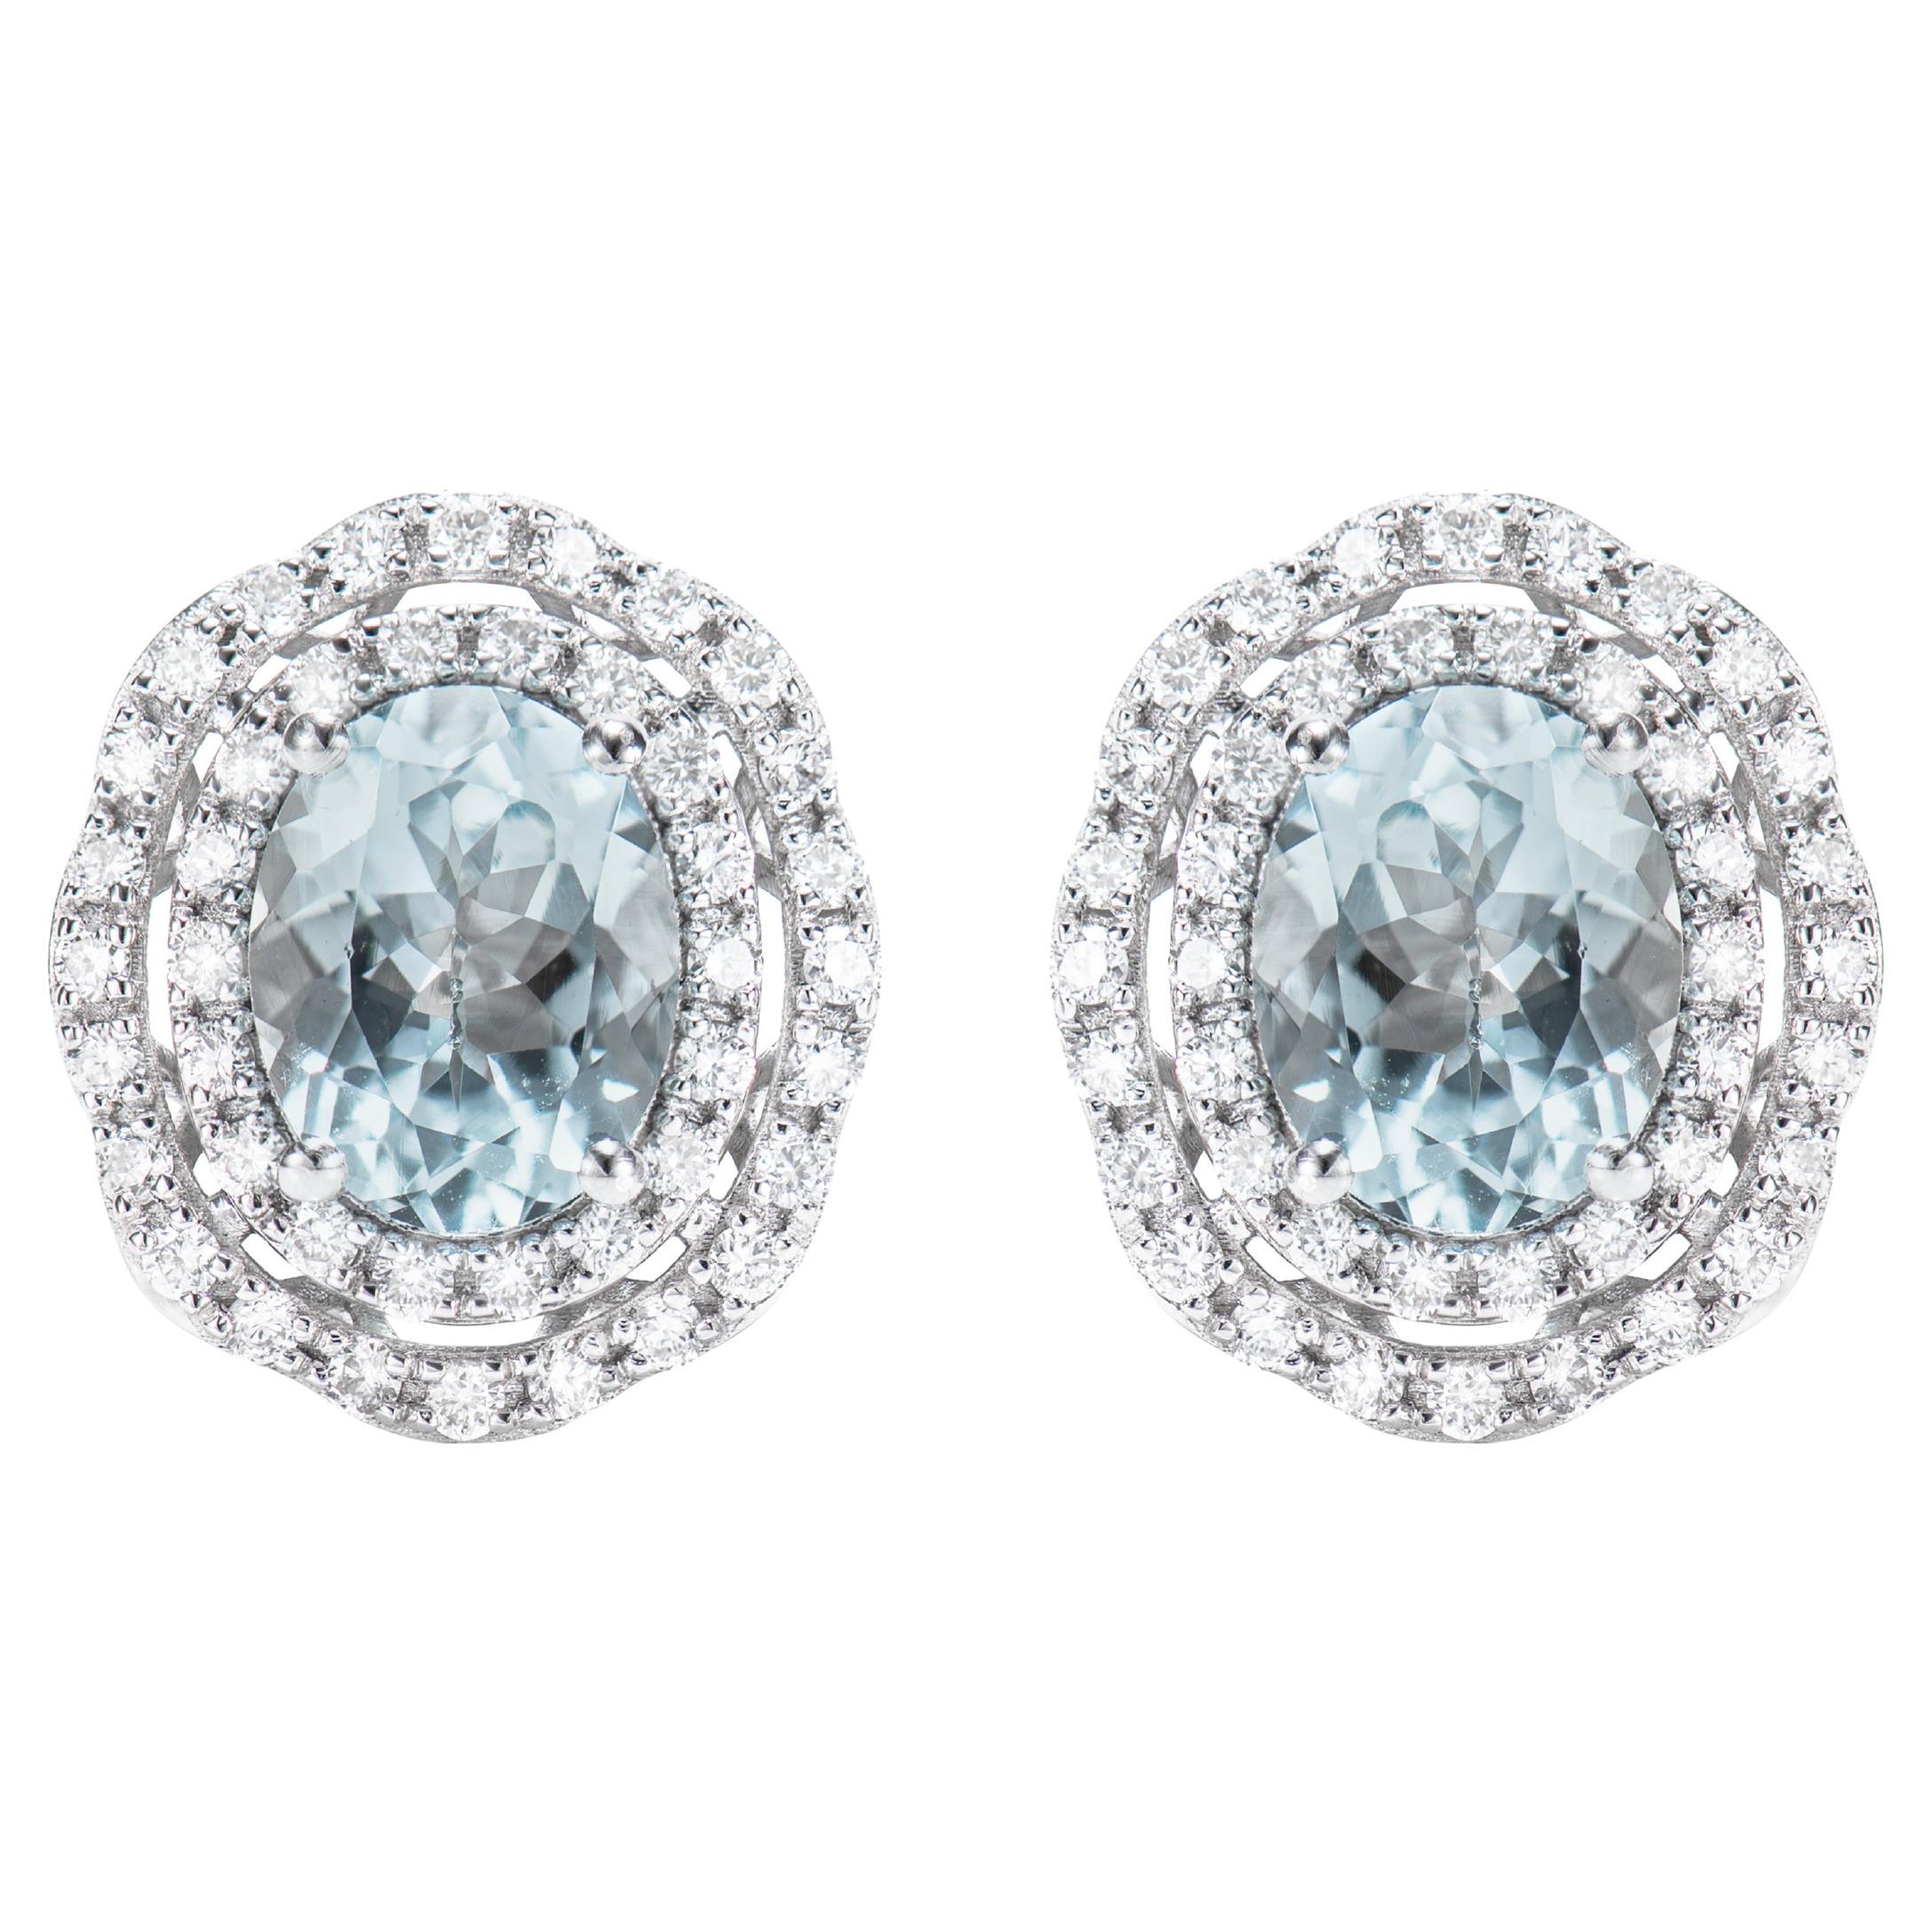 Aquamarine and White Diamond Studs Earring in 18 Karat White Gold. For Sale